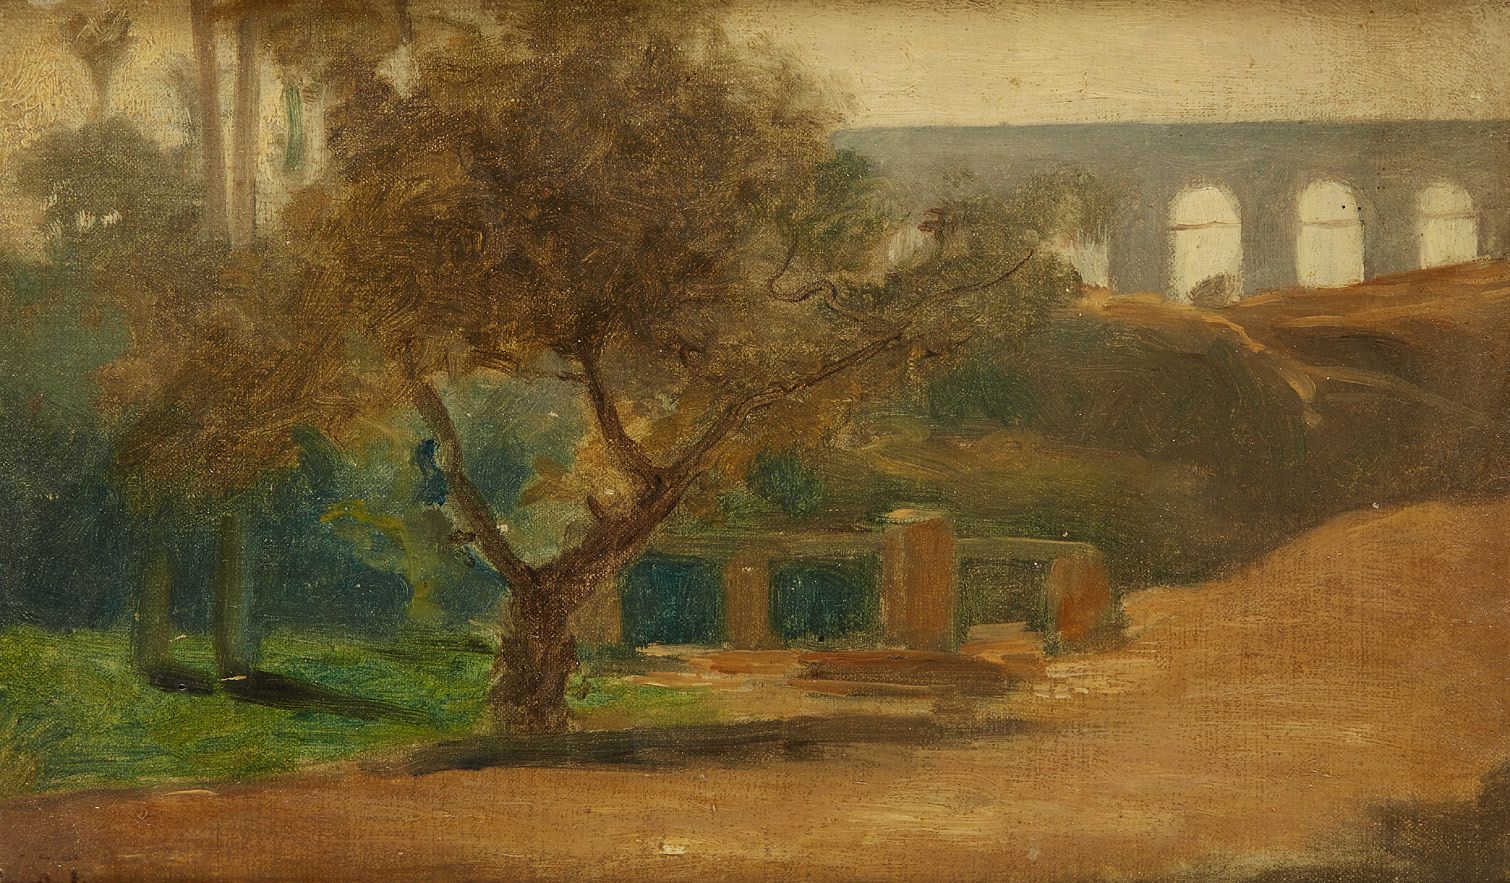 ADOLPHE FÉLIX CALS (1810-1880) 有水渠的风景
板面油画，左下角签名。
14 x 22 cm
(1943年世博会 雅克-杜堡画廊)